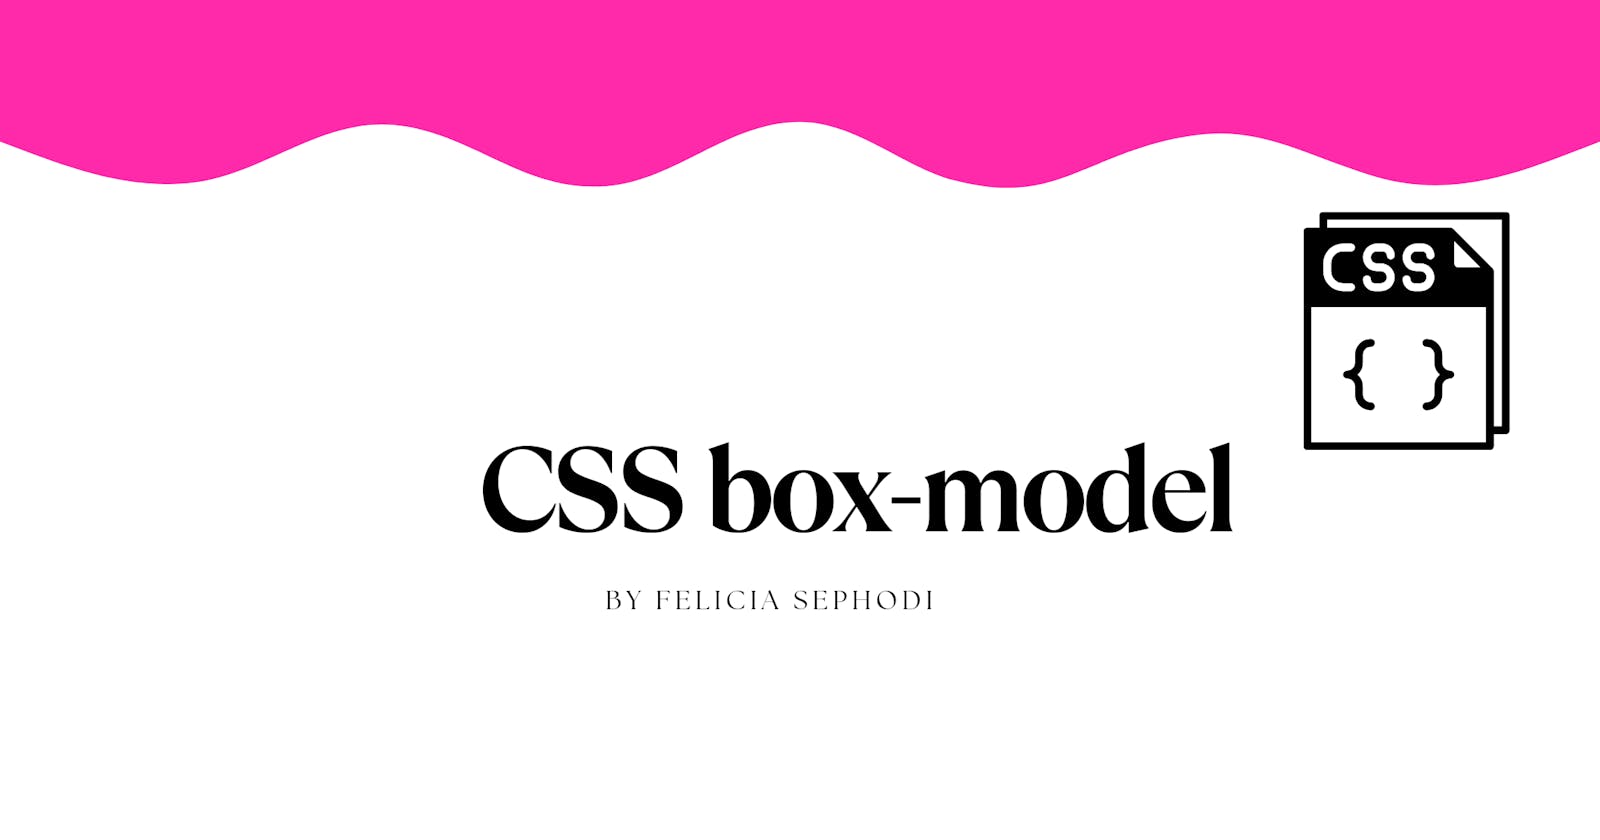 The CSS box-model